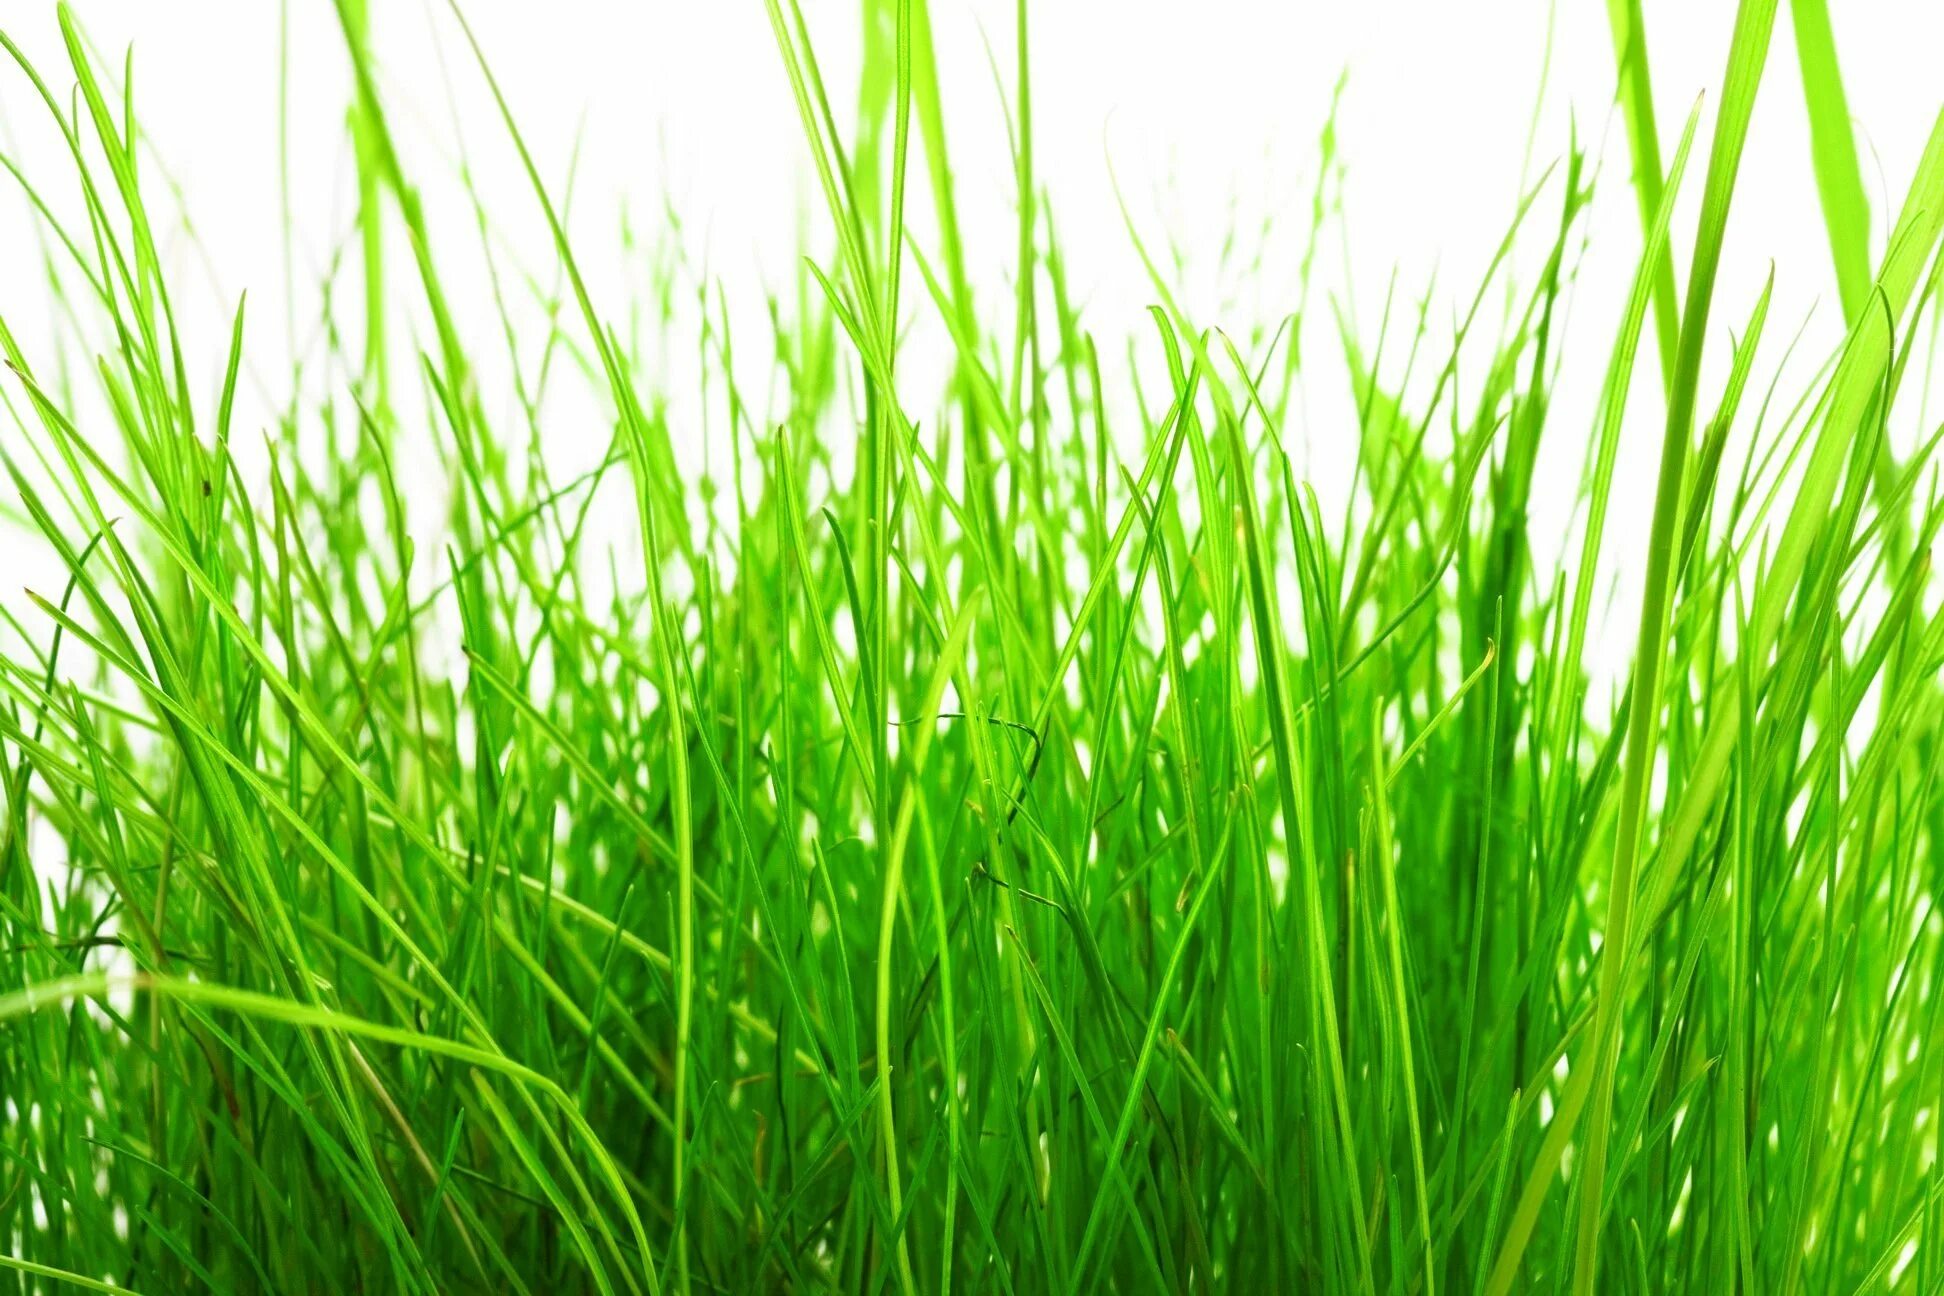 Grass plant. Трава. Трова. Зелень трава. Травка для детей.